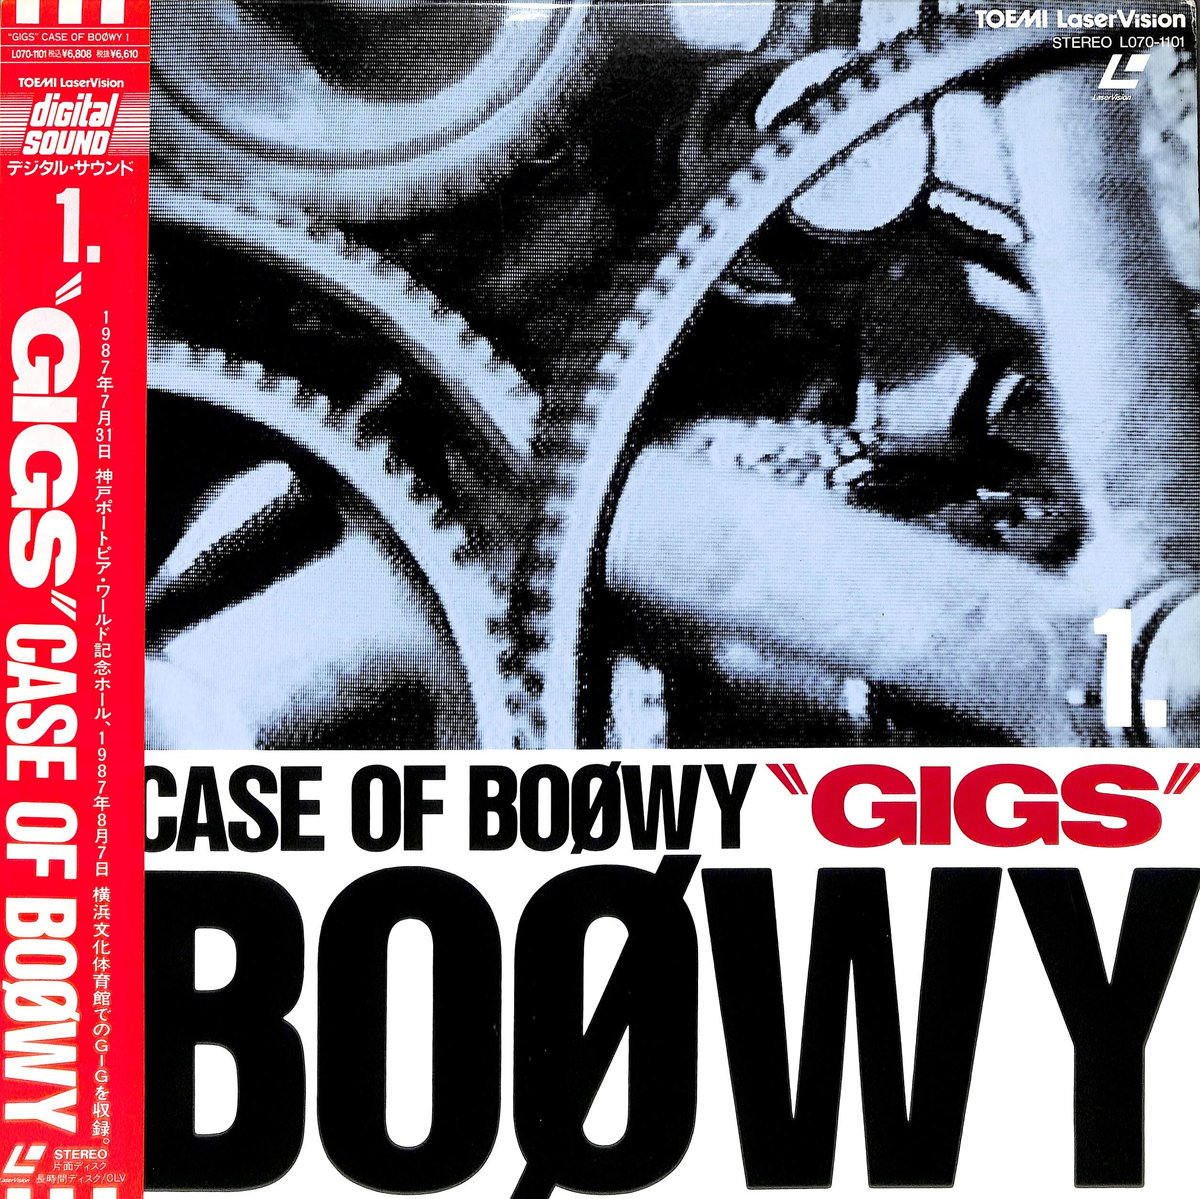 BOØWY / Gigs Case Of Boowy 1 [発売年:1987年][※品番:L0...